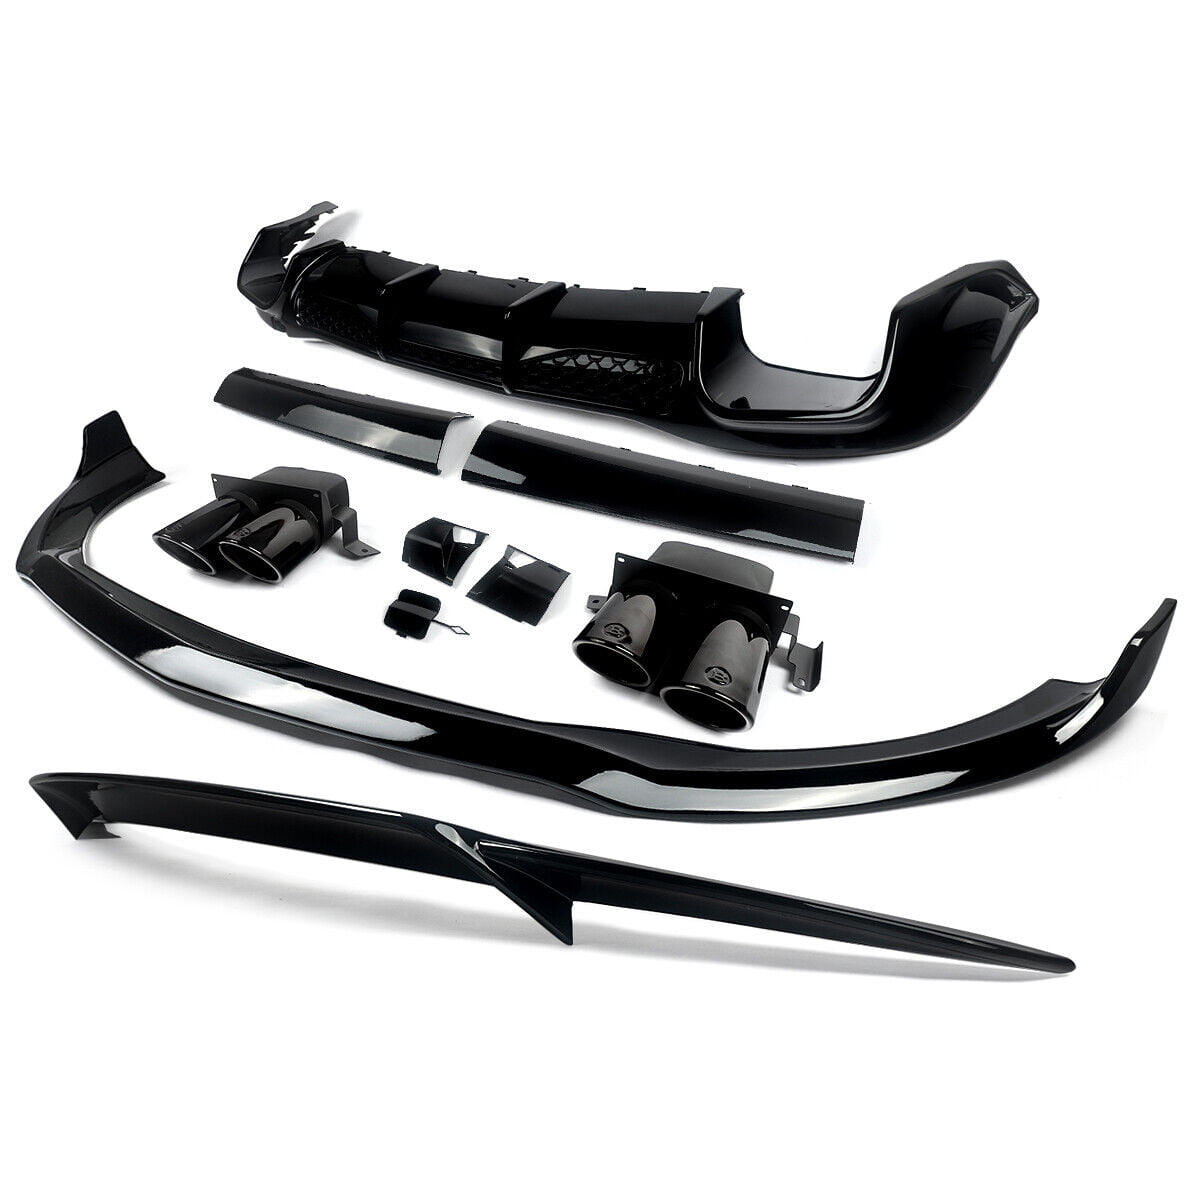 For Mercedes S-Class W223 Gloss Black Front Splitter Lip Rear Diffuser Body Kits